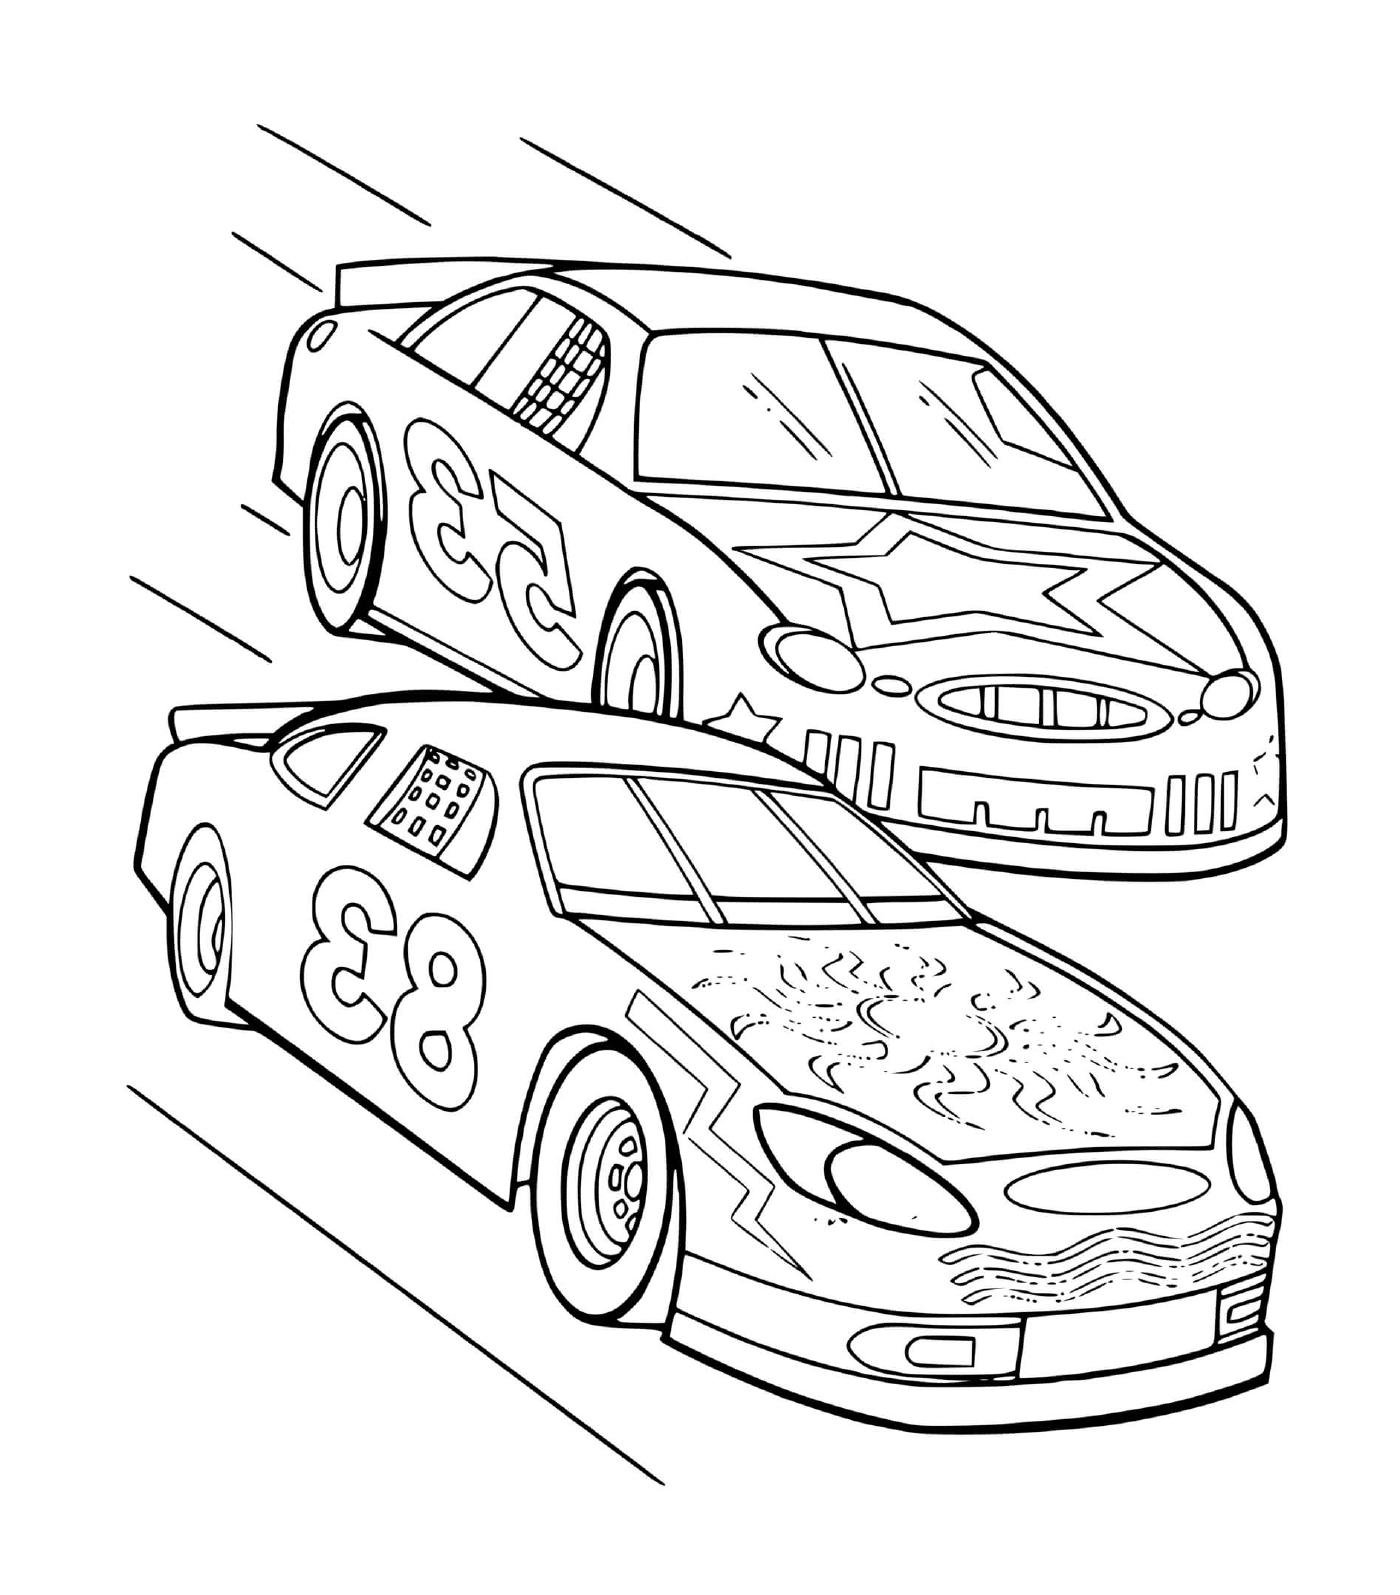  dois carros de corrida 